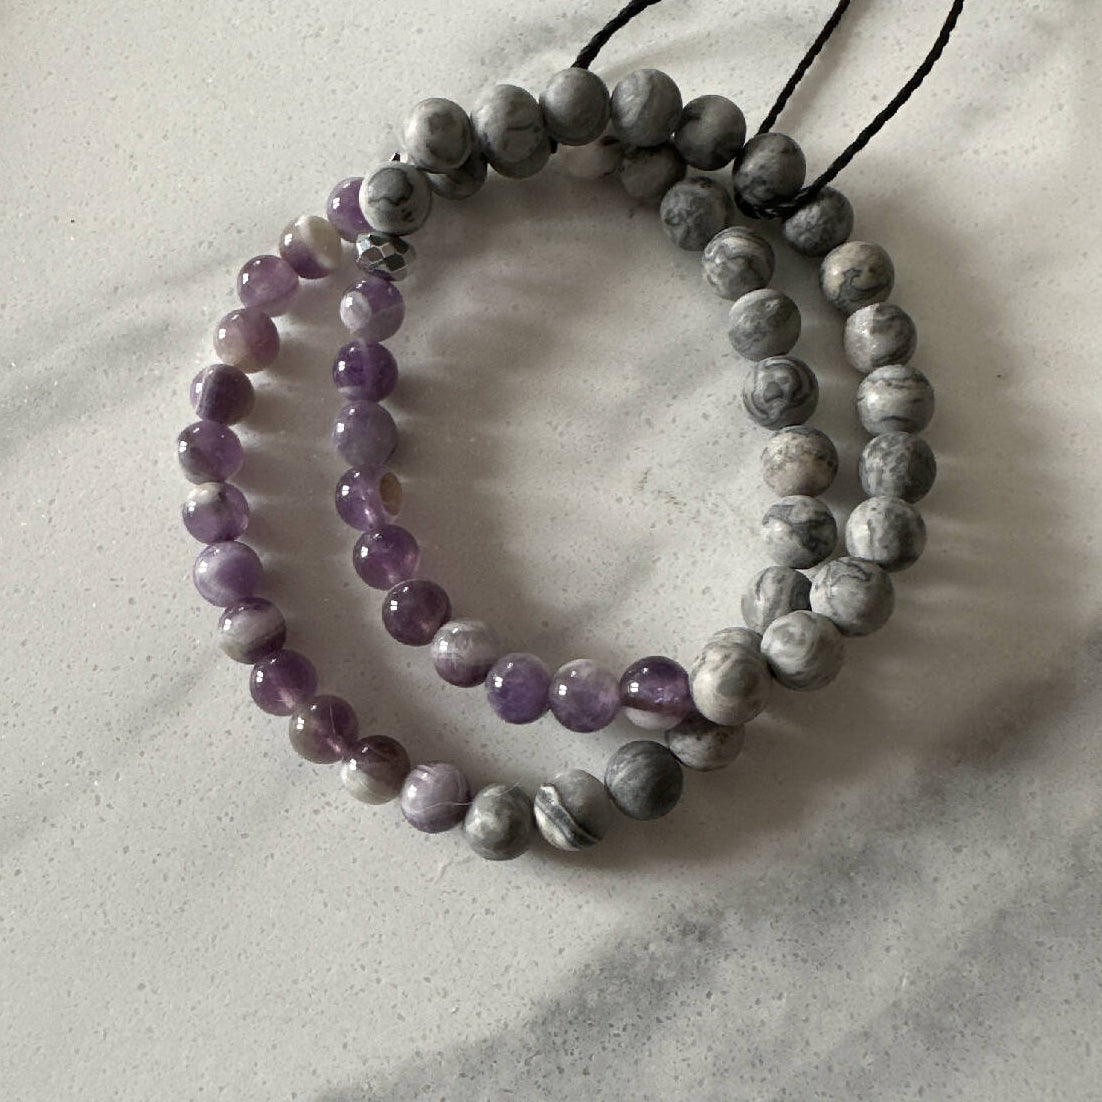 Gray and purple bracelet